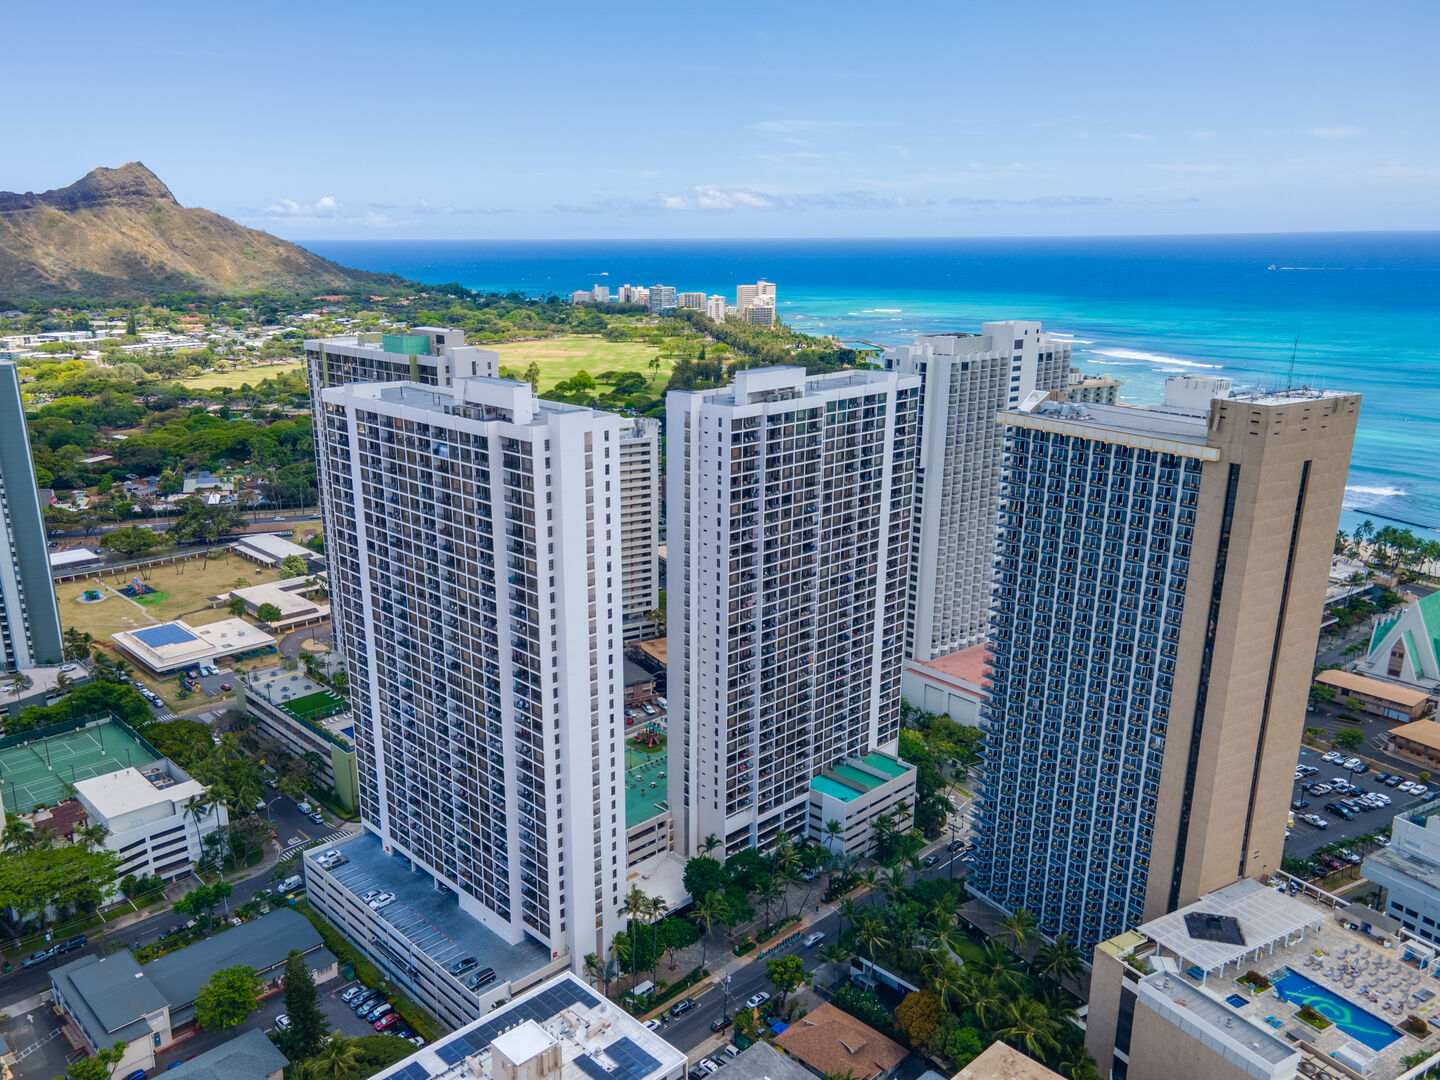 Drone view of the Waikiki Banyan towers